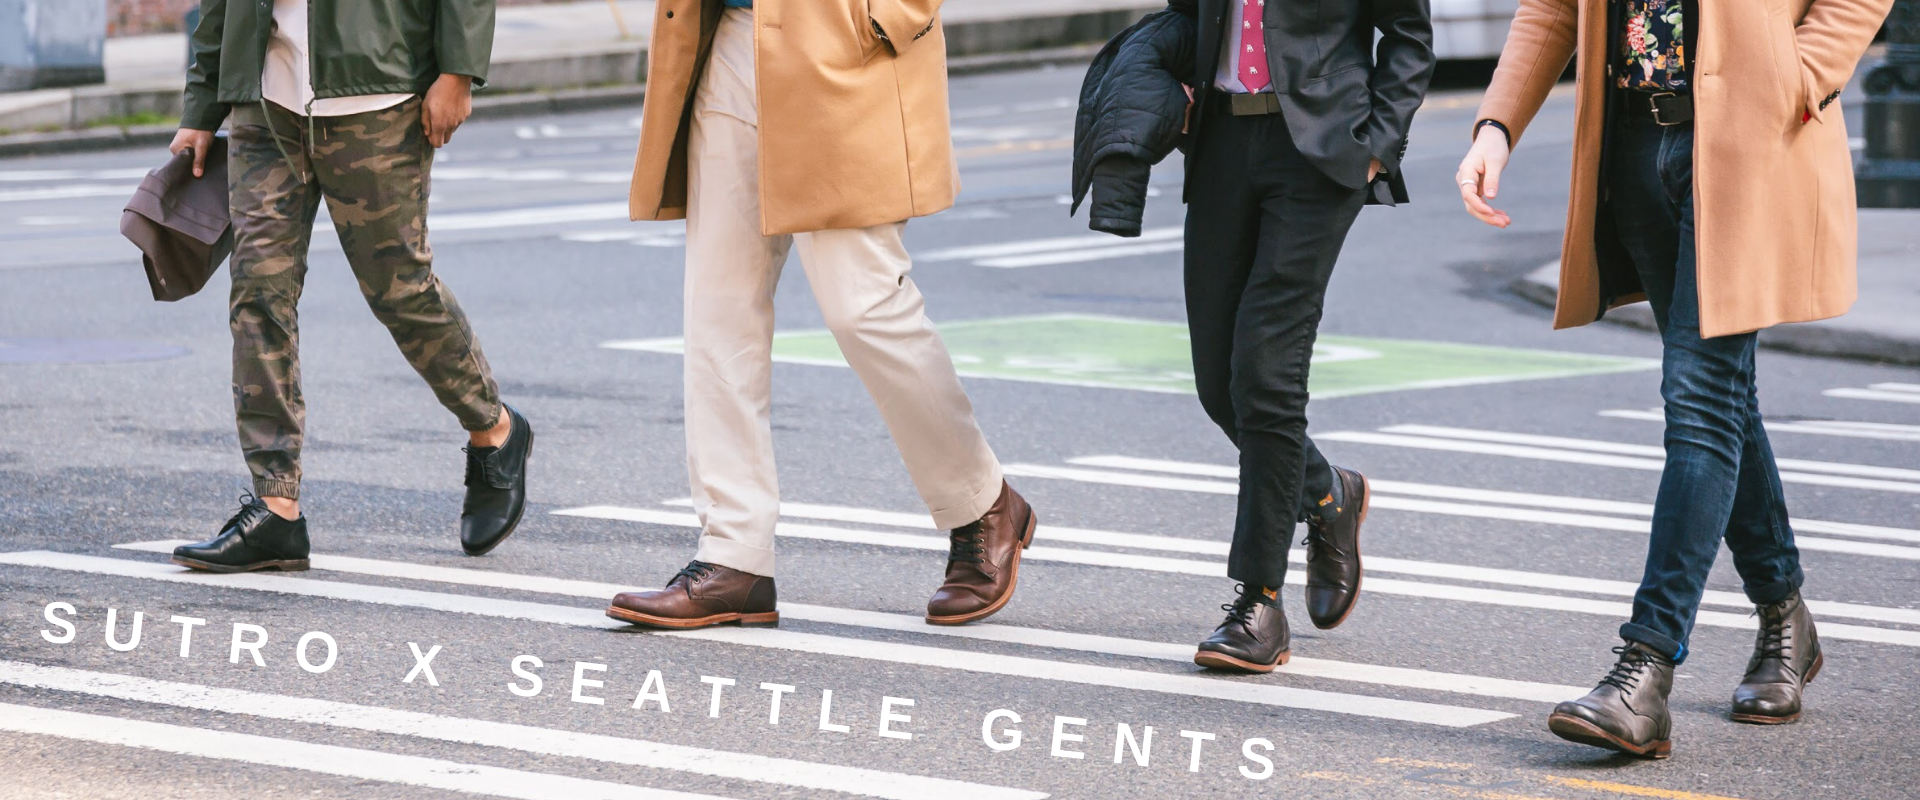 Sutro Footwear x Seattle Gents Collaboration